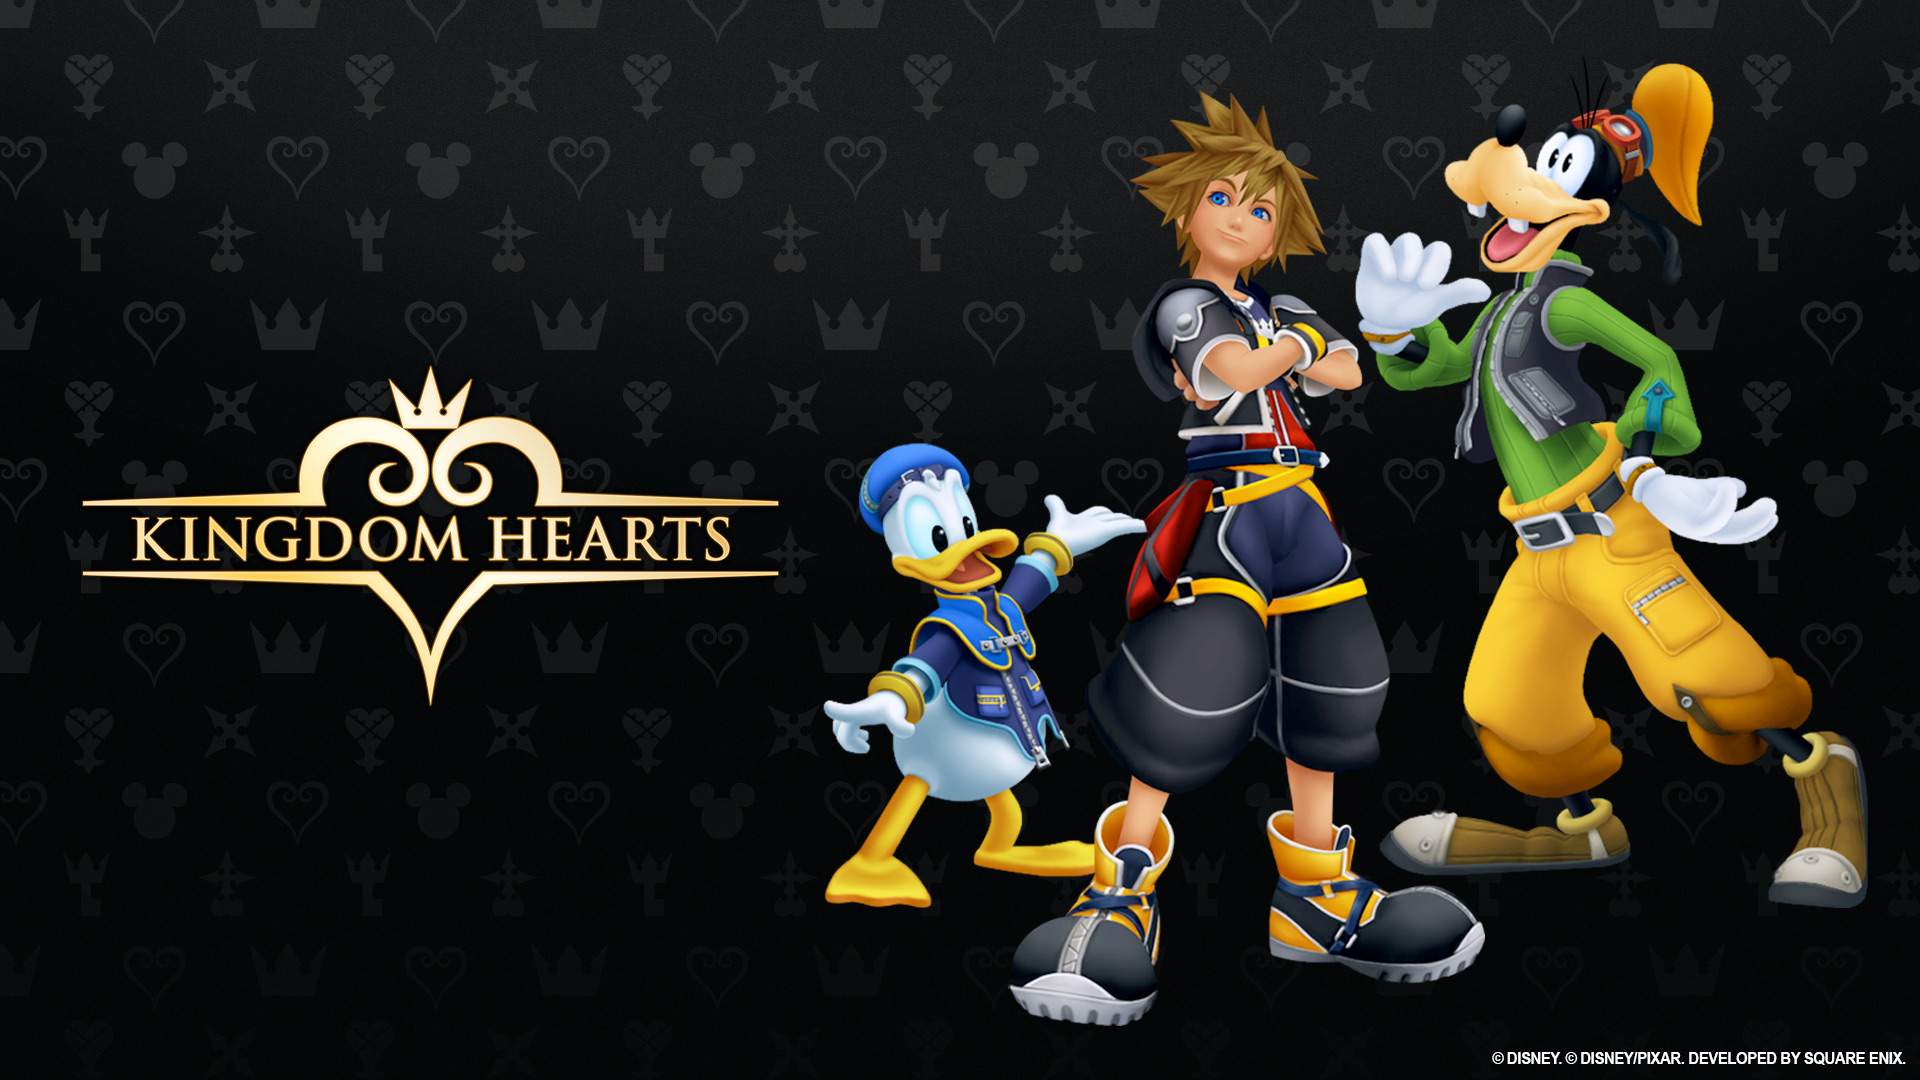 Kingdom Hearts for Nintendo Switch